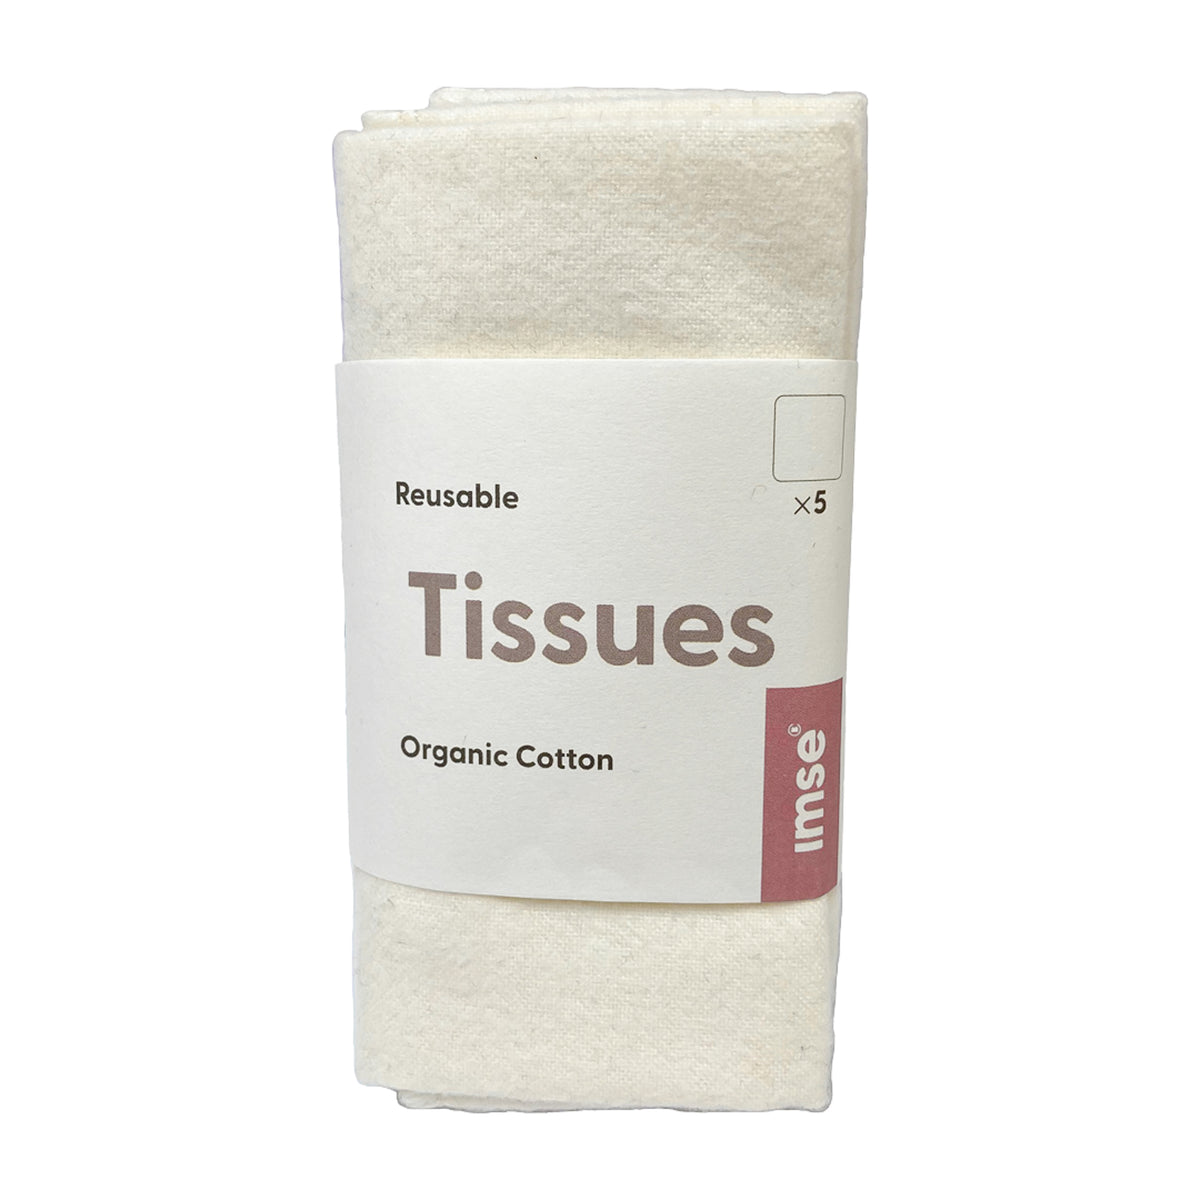 ImseVimse Reusable Tissues Organic Cotton